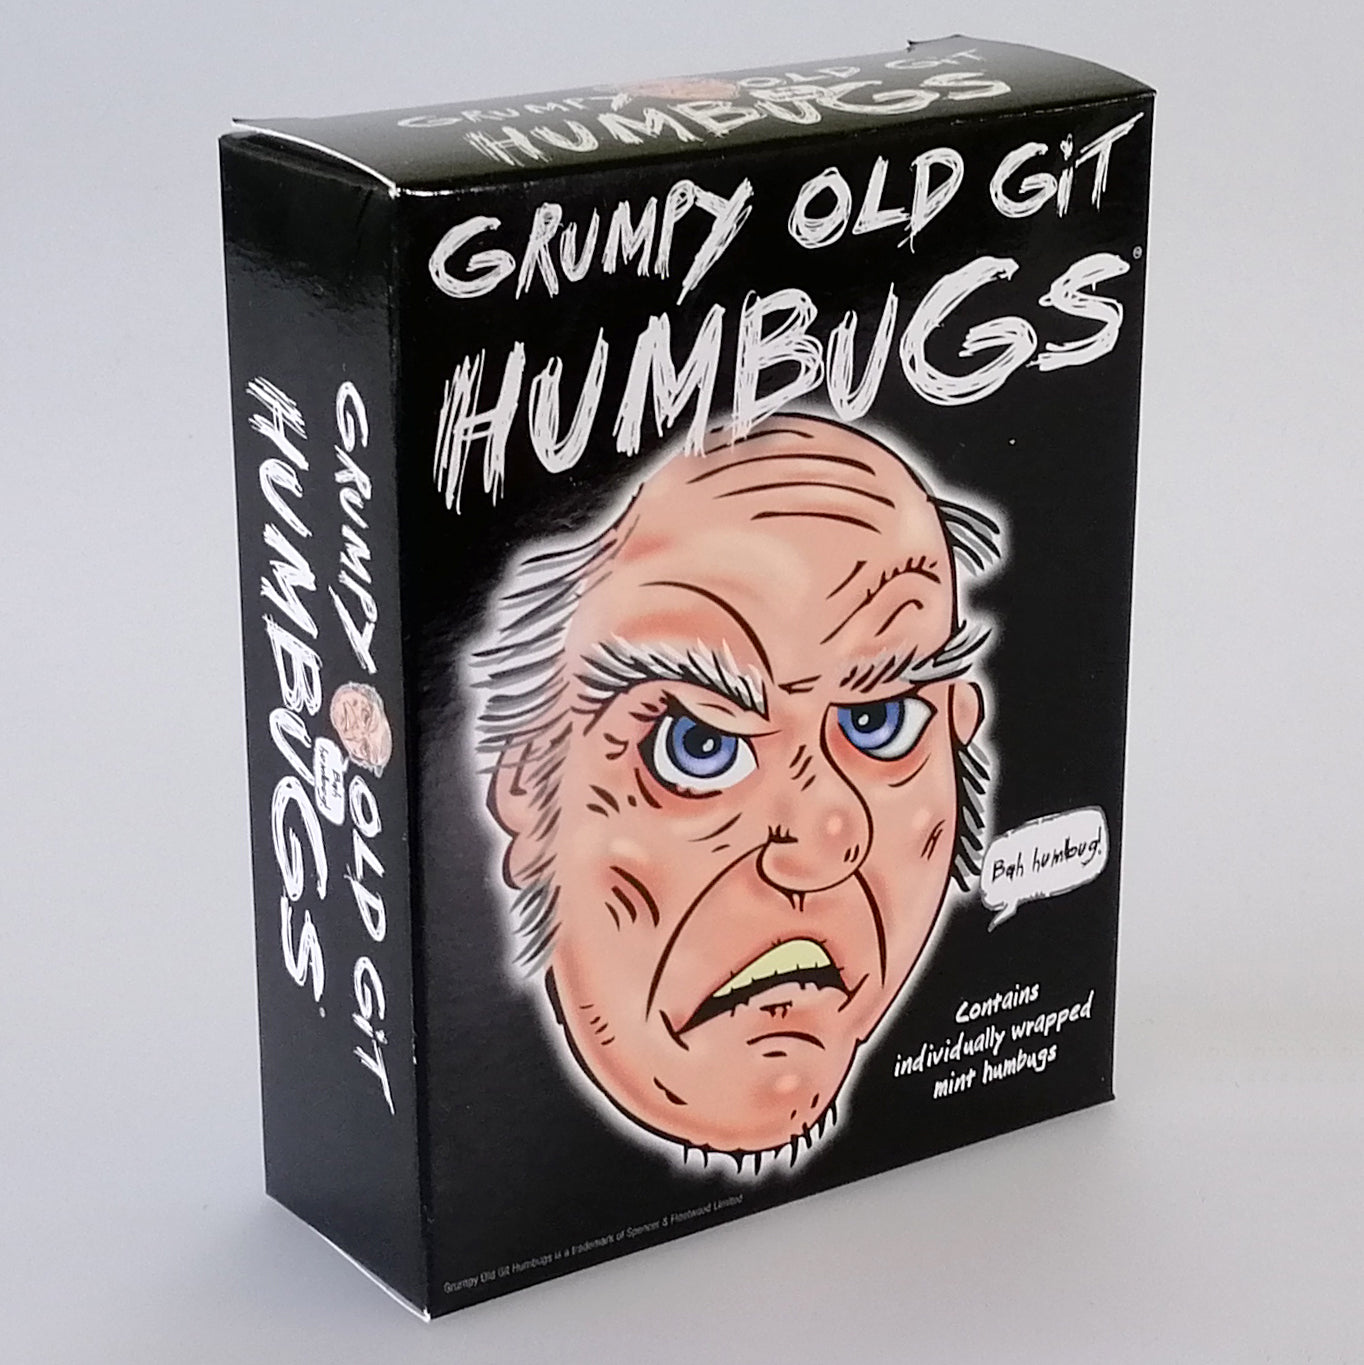 Grumpy Old Git' - Humbugs